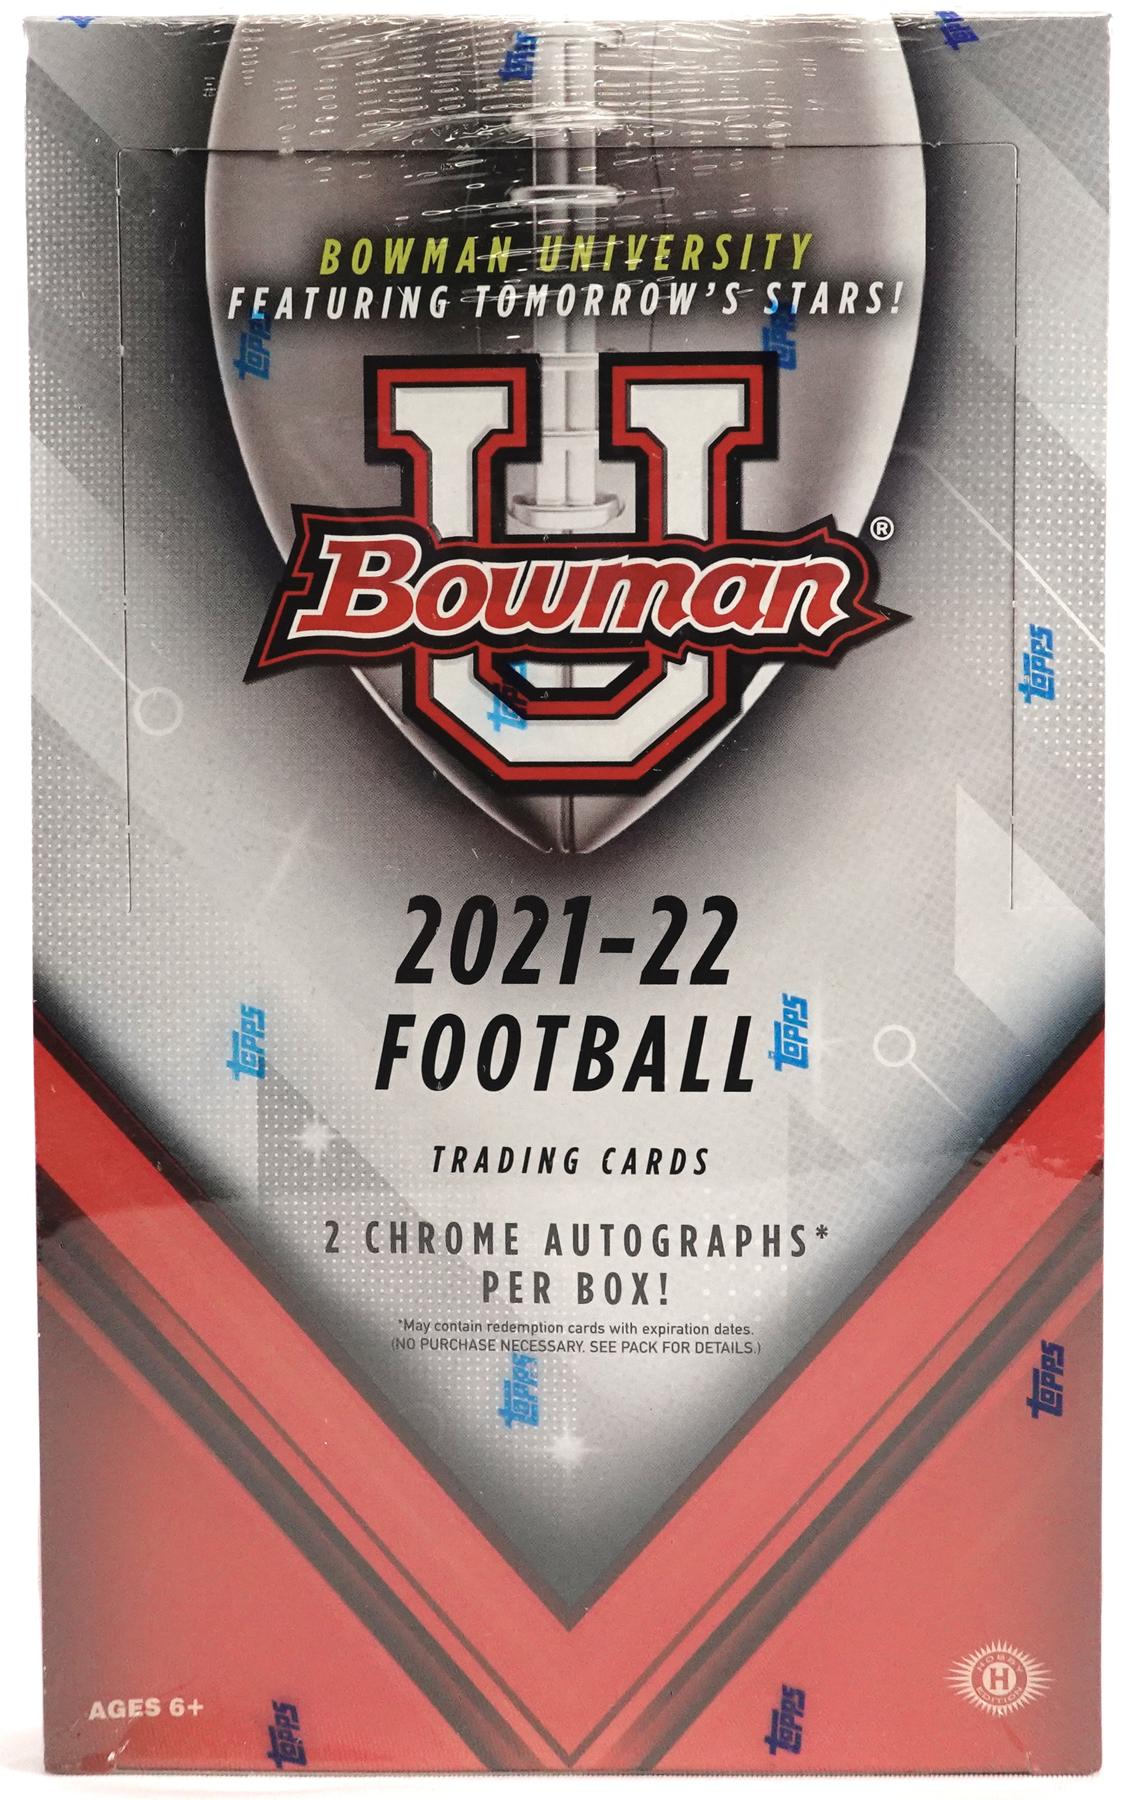 2022 Bowman University Football Hobby Box DA Card World